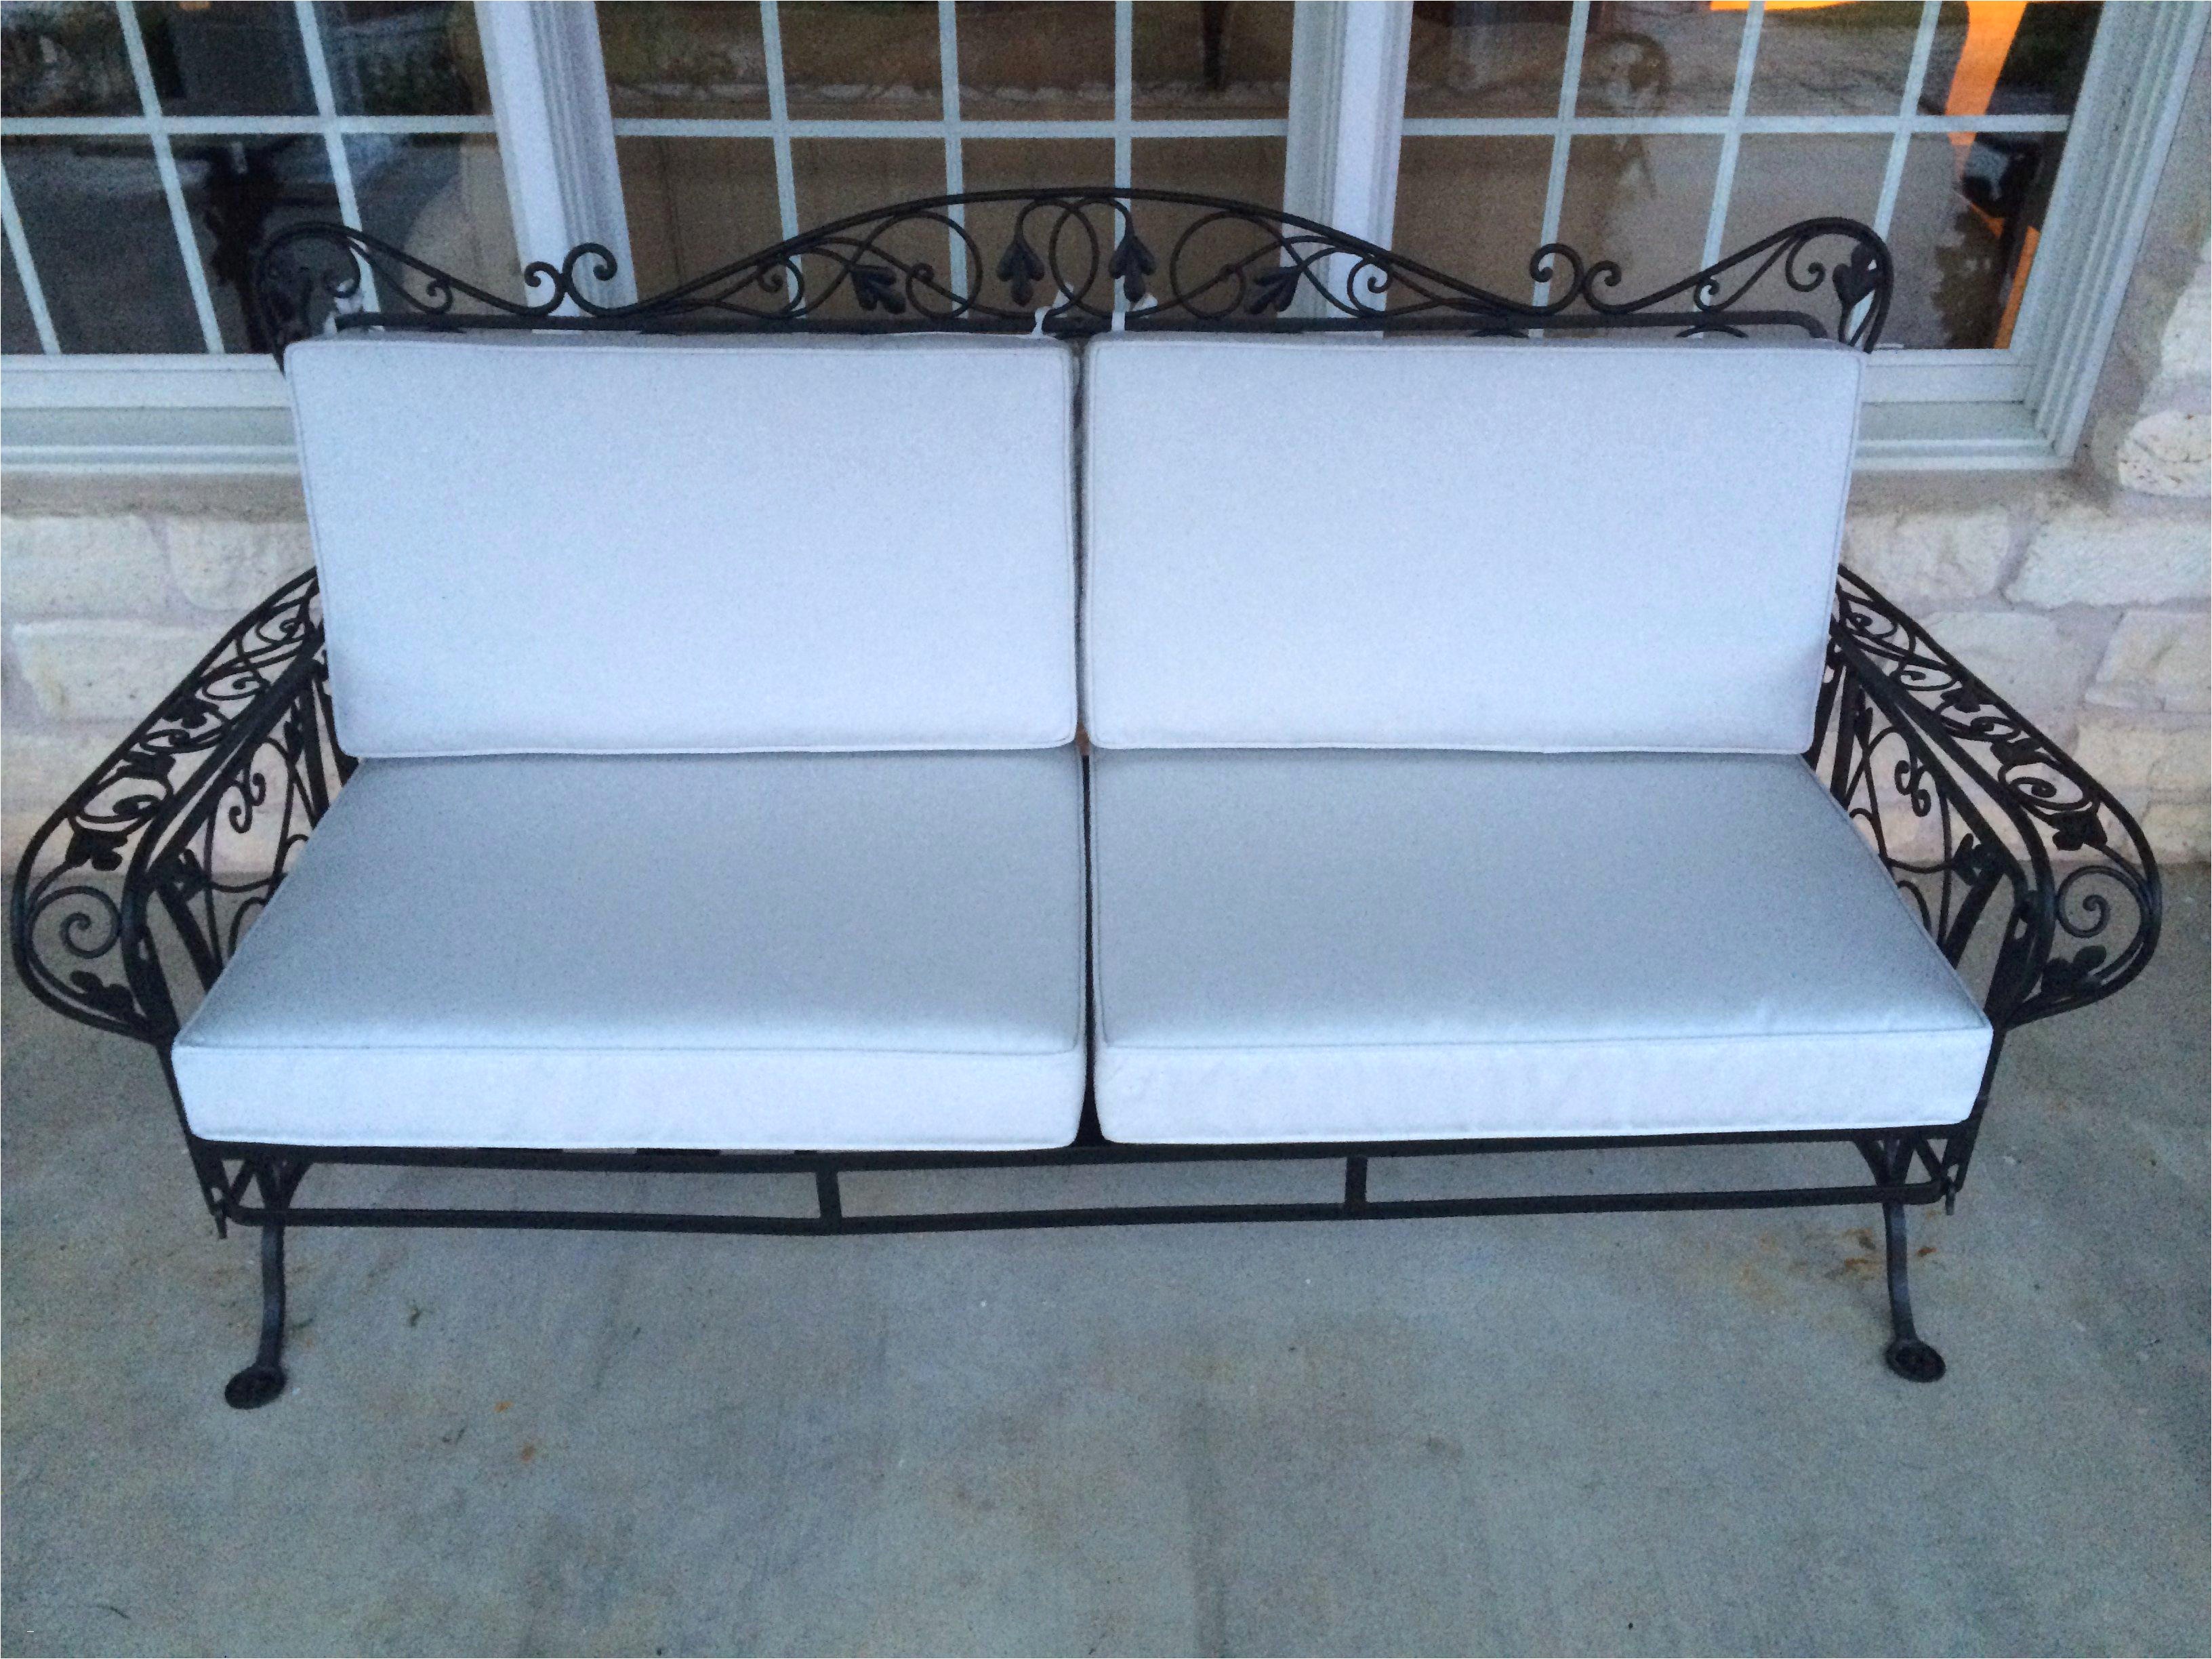 cleaning patio furniture elegant furniture outdoor loveseat elegant wicker outdoor sofa 0d patio